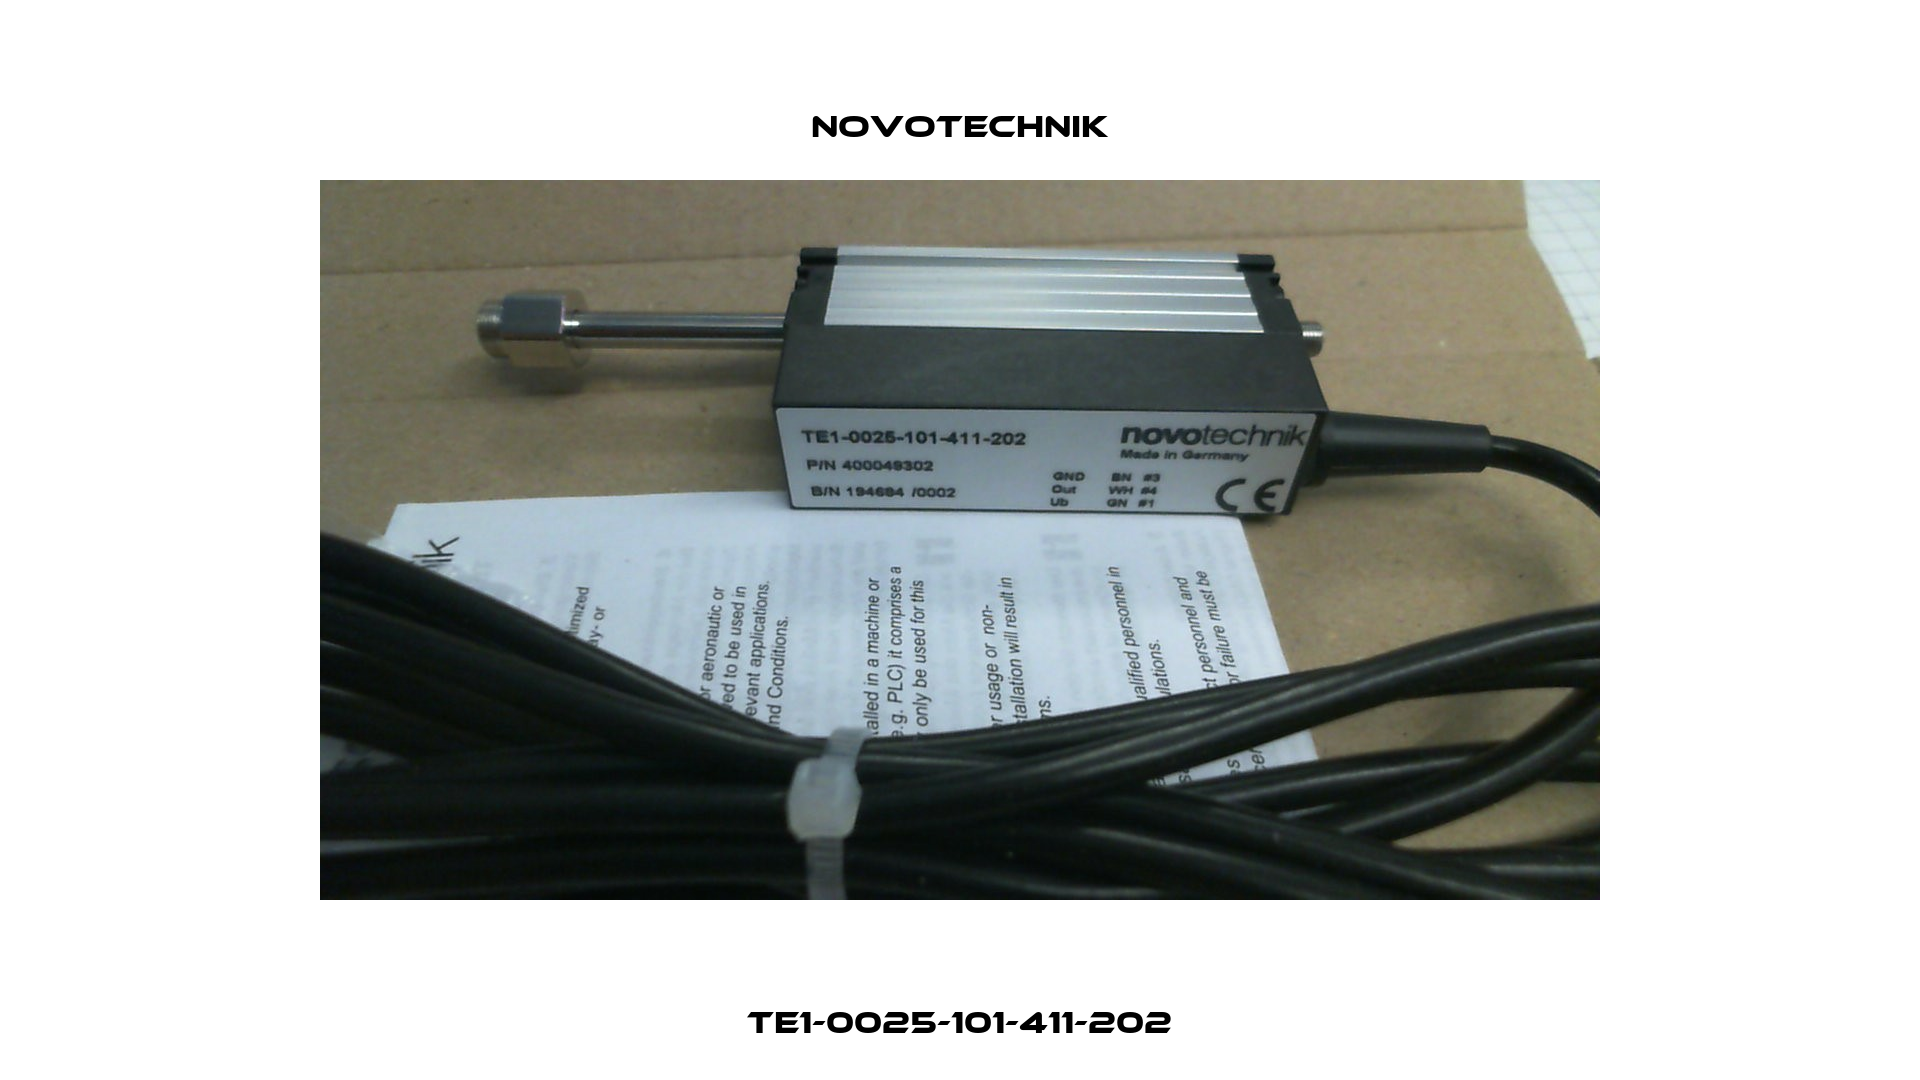 TE1-0025-101-411-202 Novotechnik